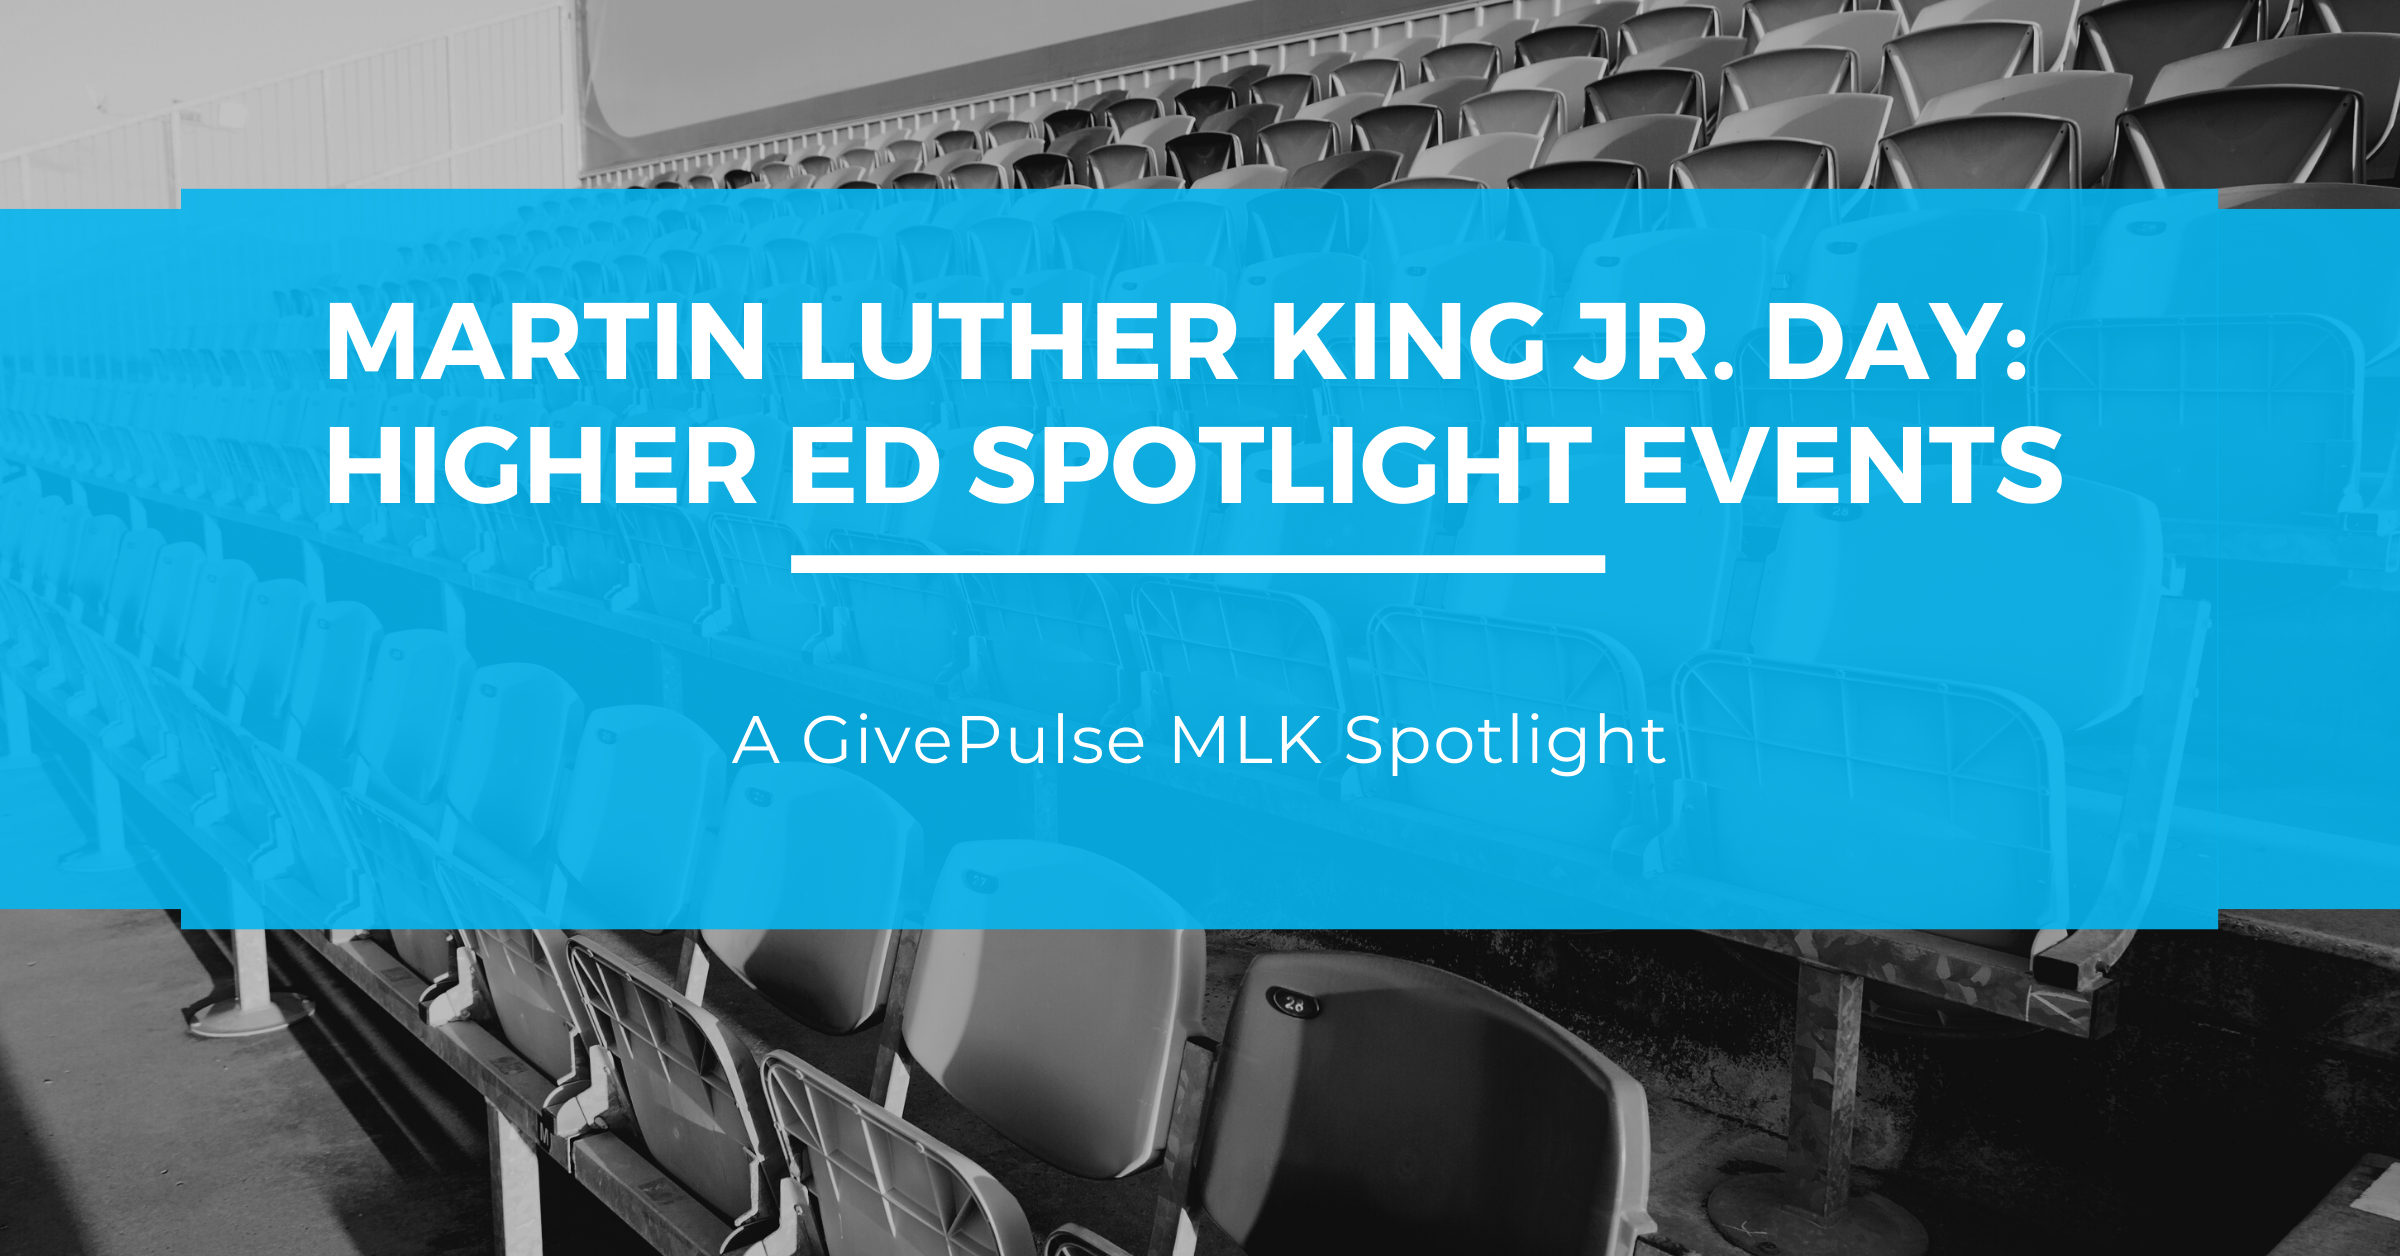 Martin Luther King Jr. Day Higher Ed Spotlight Events - GivePulse Blog